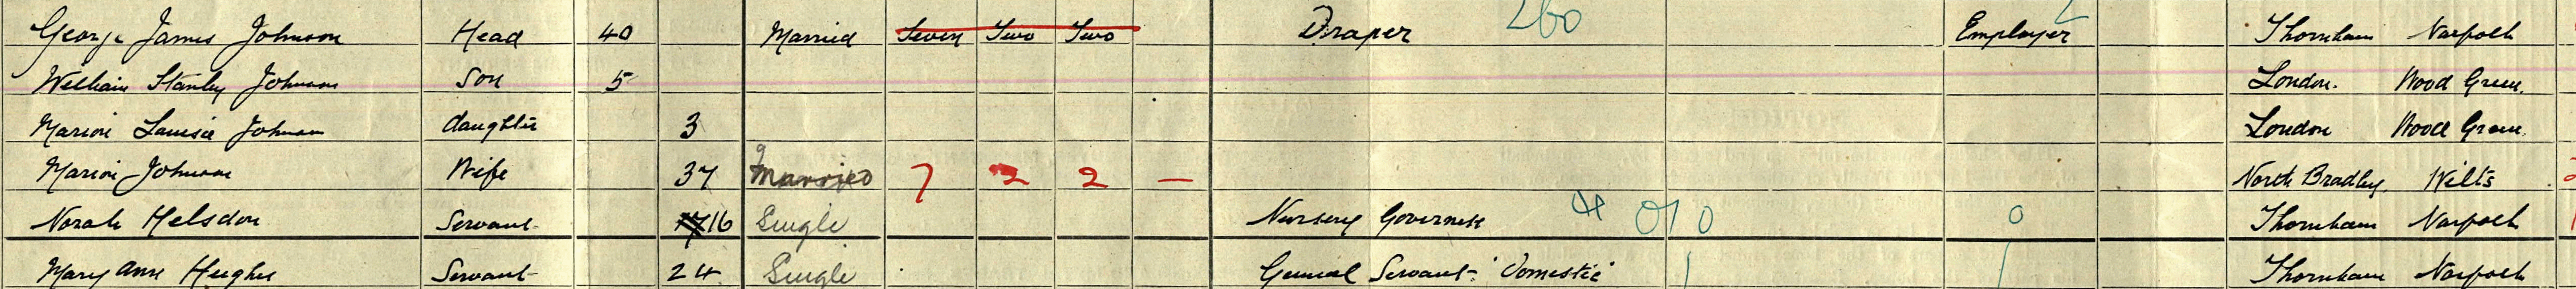 norah helsdon 1911 census